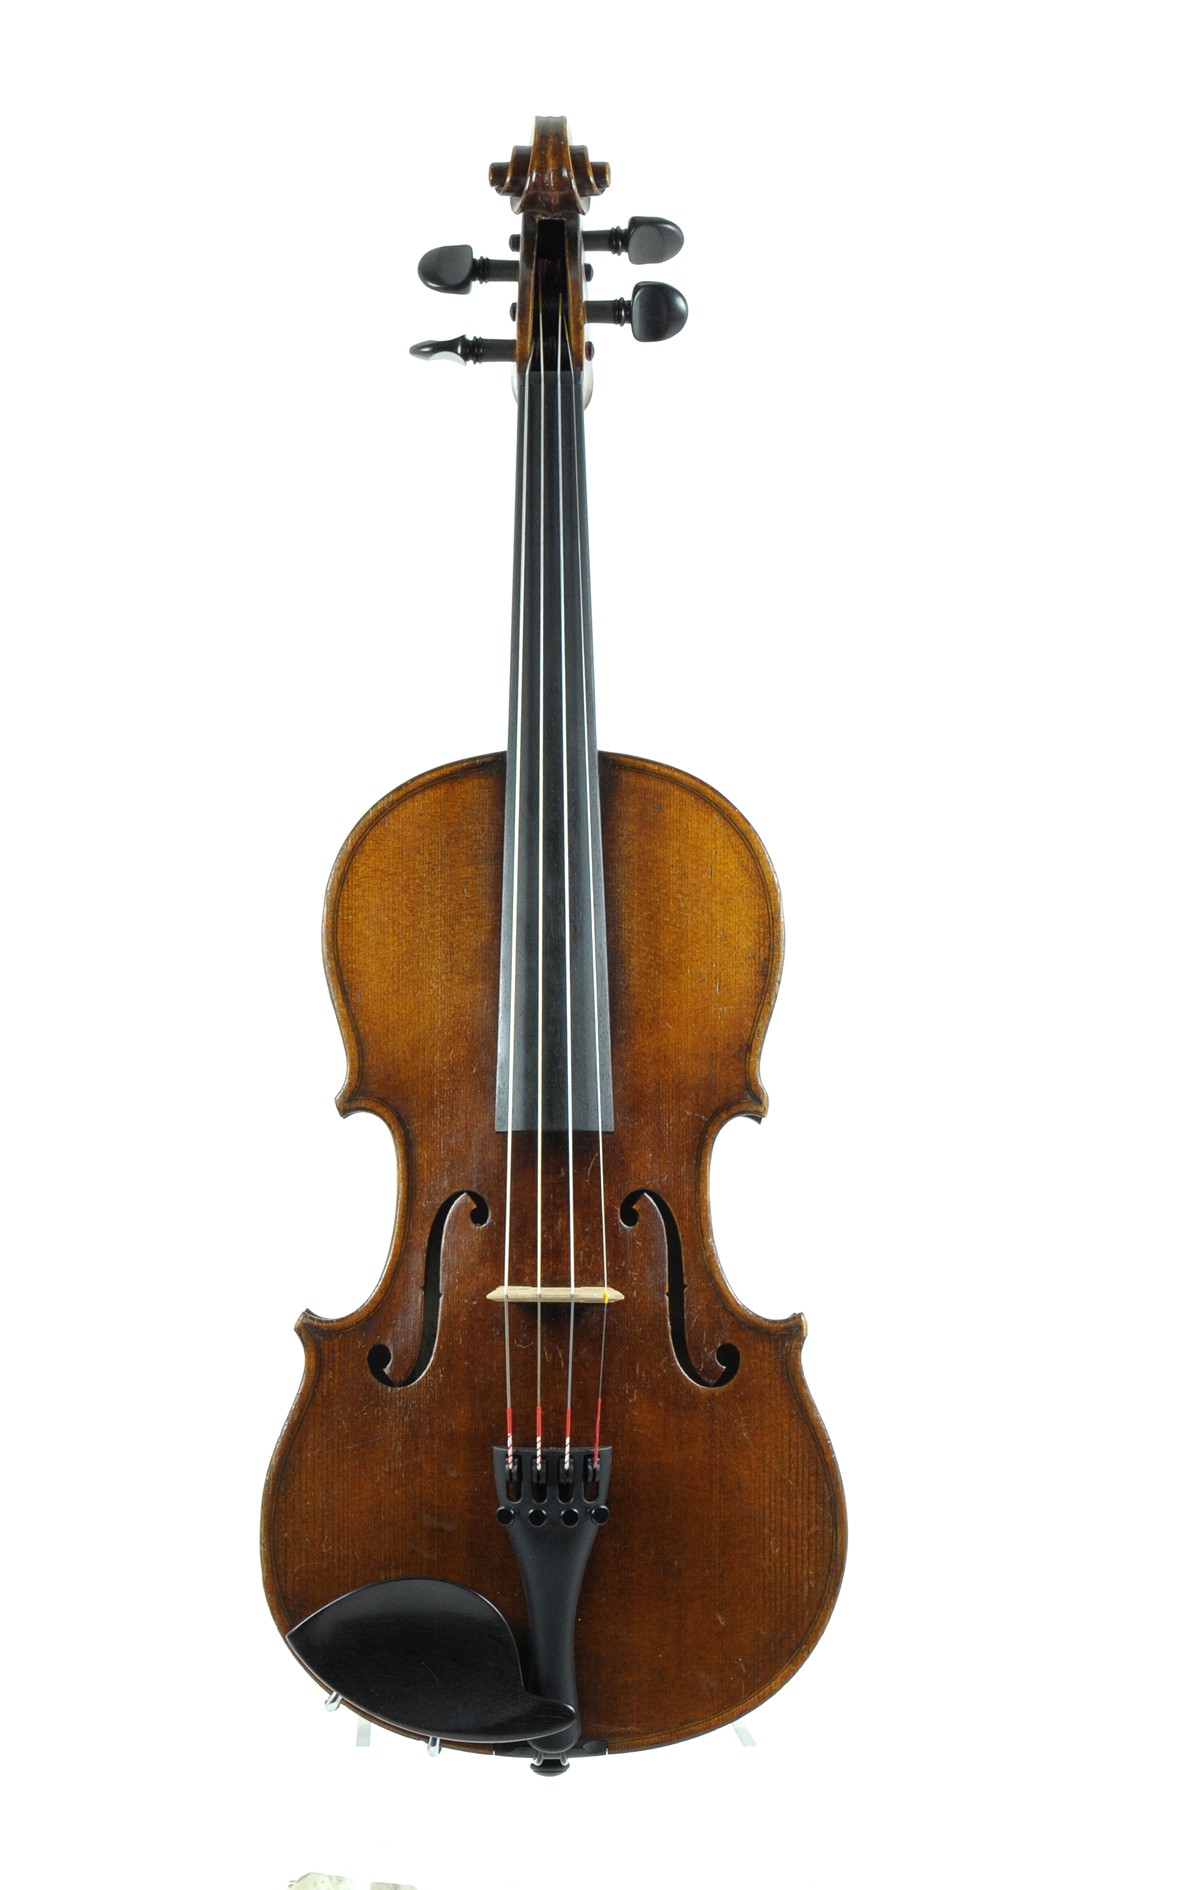 F. A. Meisel, Klingenthal - 3/4 Violine, 1896 - Decke